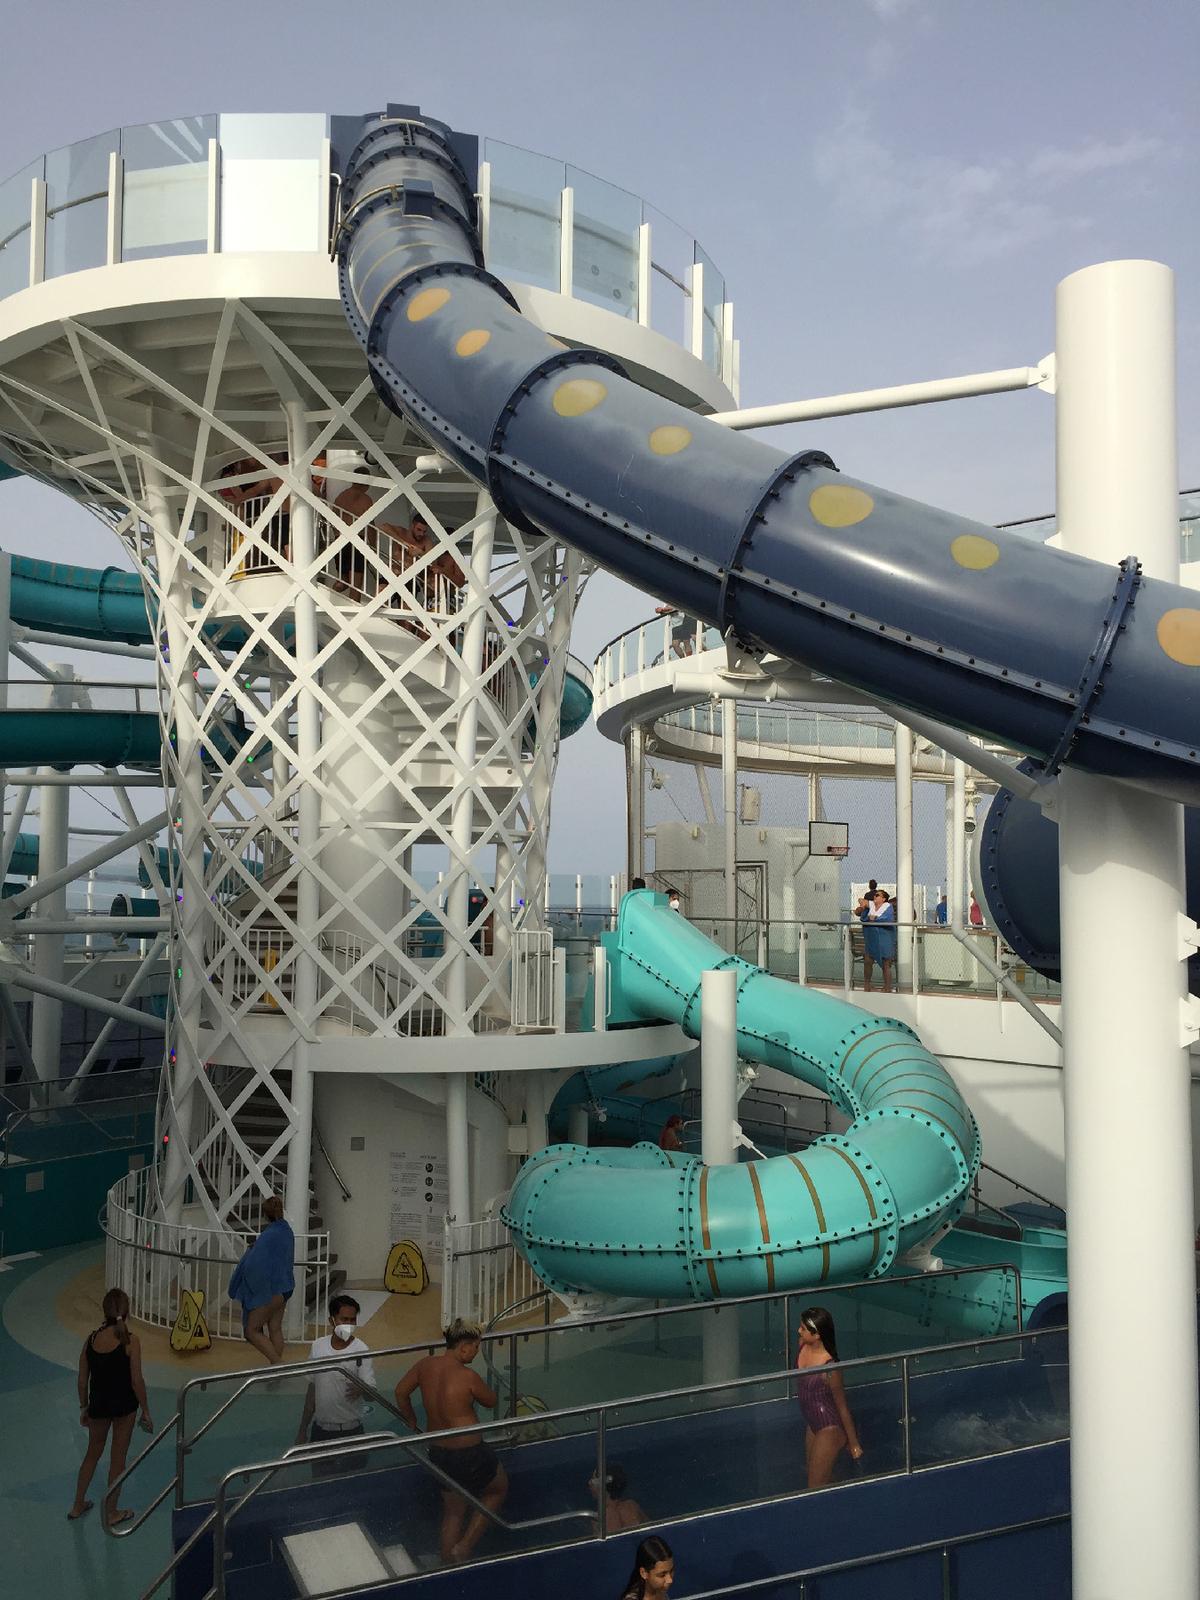 Multiple water slides festoon the top deck of the Costa Smeralda cruise ship. (Courtesy of Barbara Selwitz)